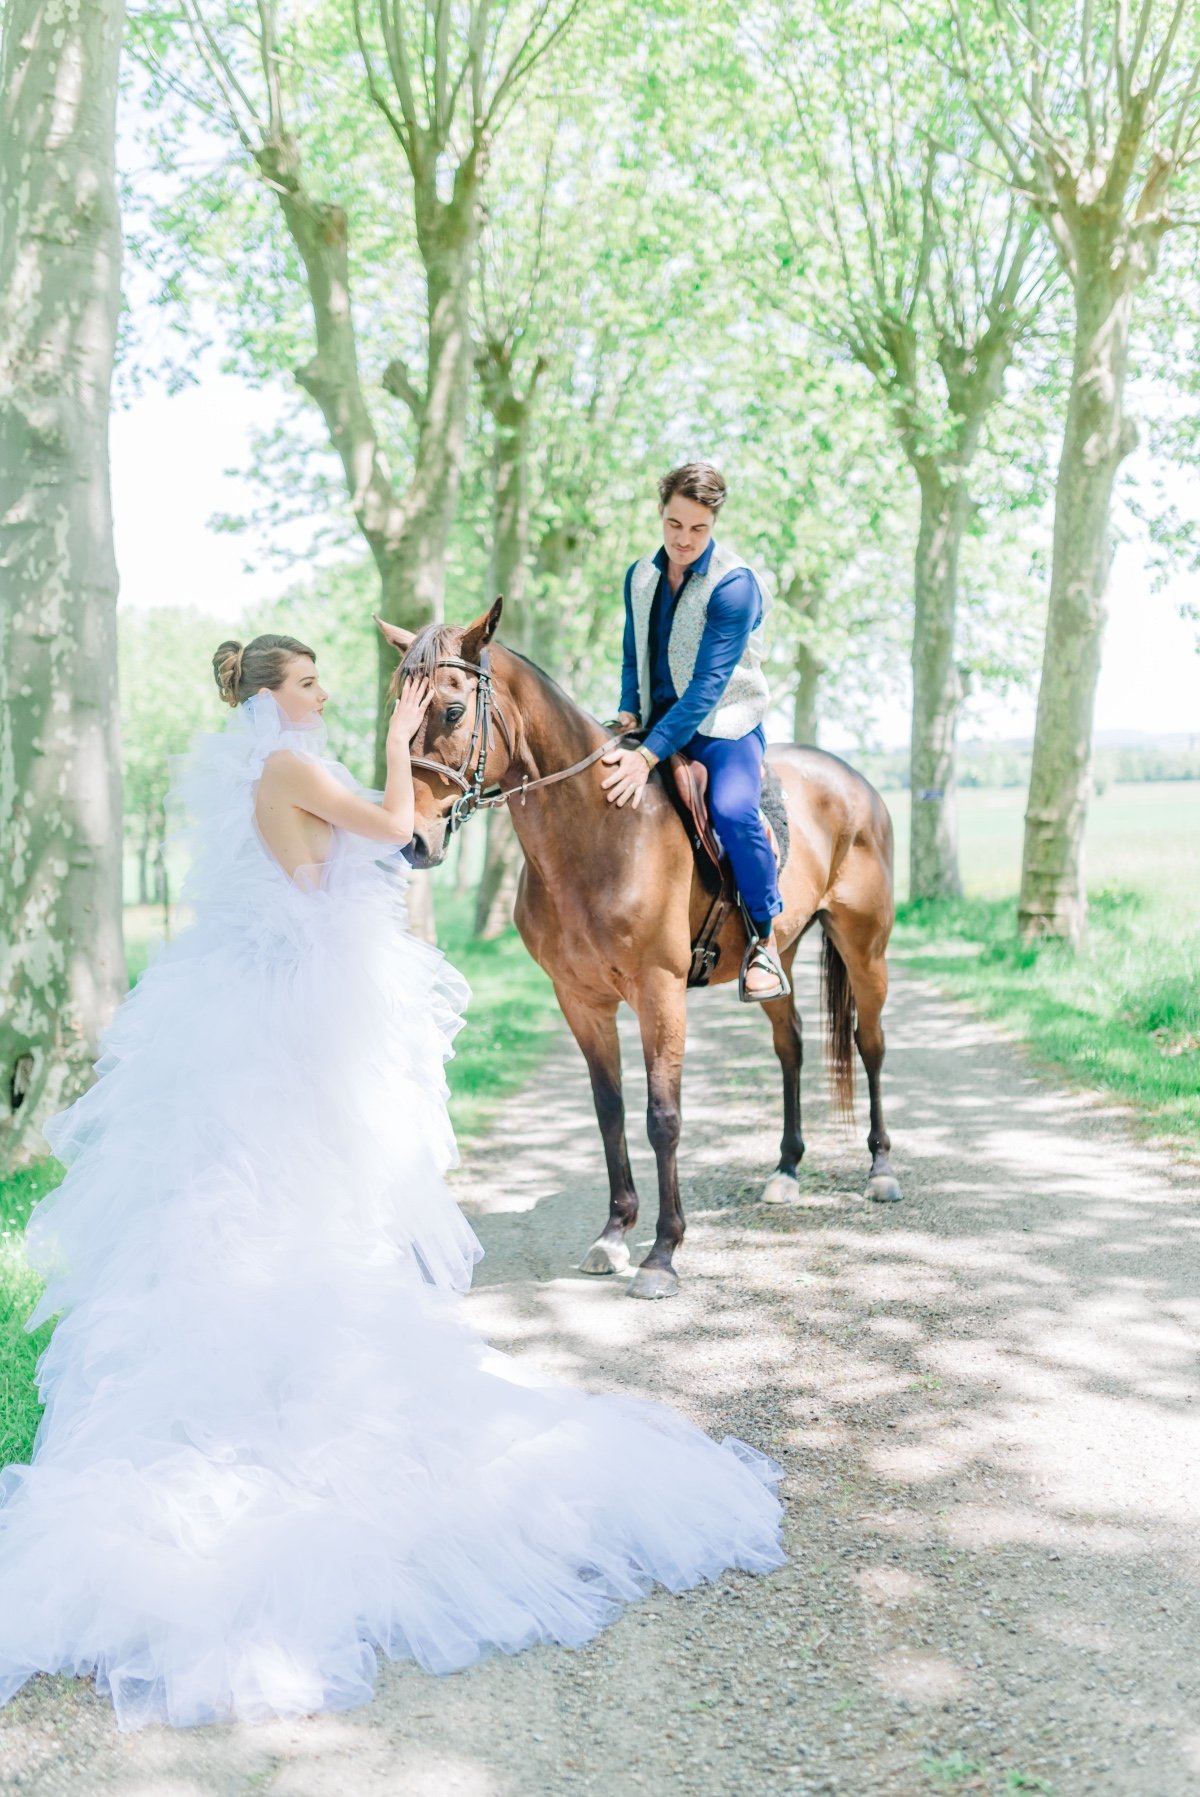 Bride encountering Prince Charming on horse